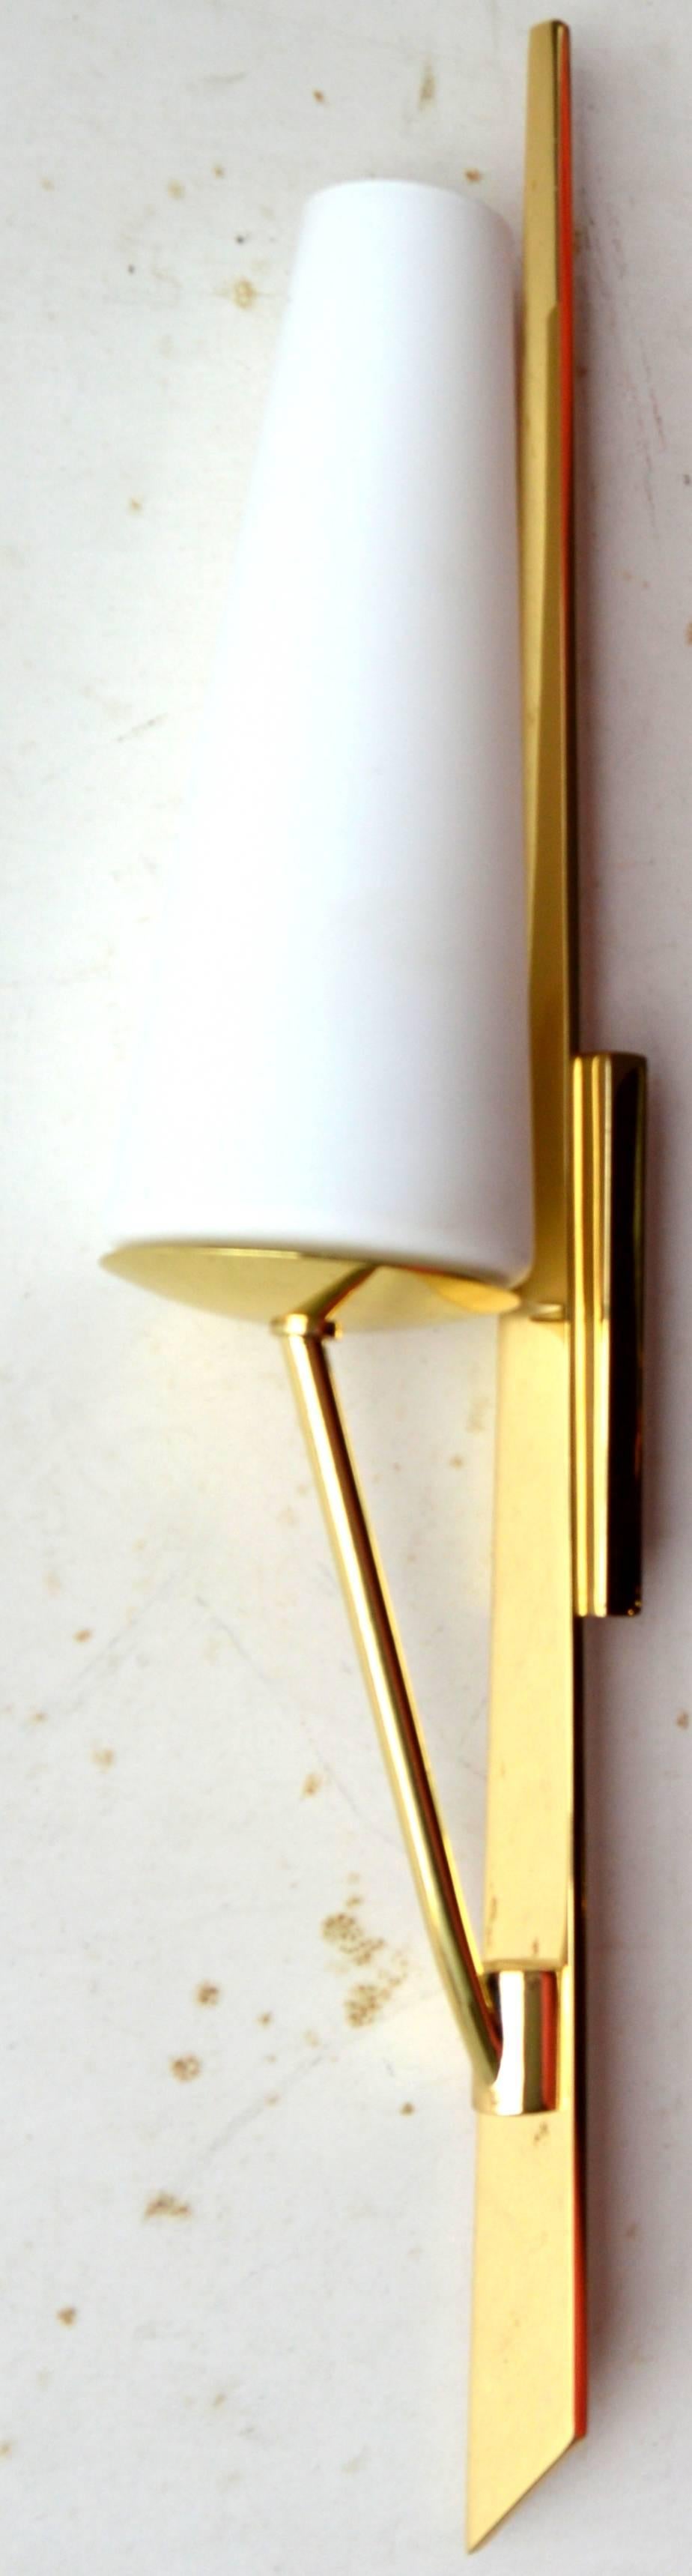 Polished Maison Arlus Brass Sconces For Sale